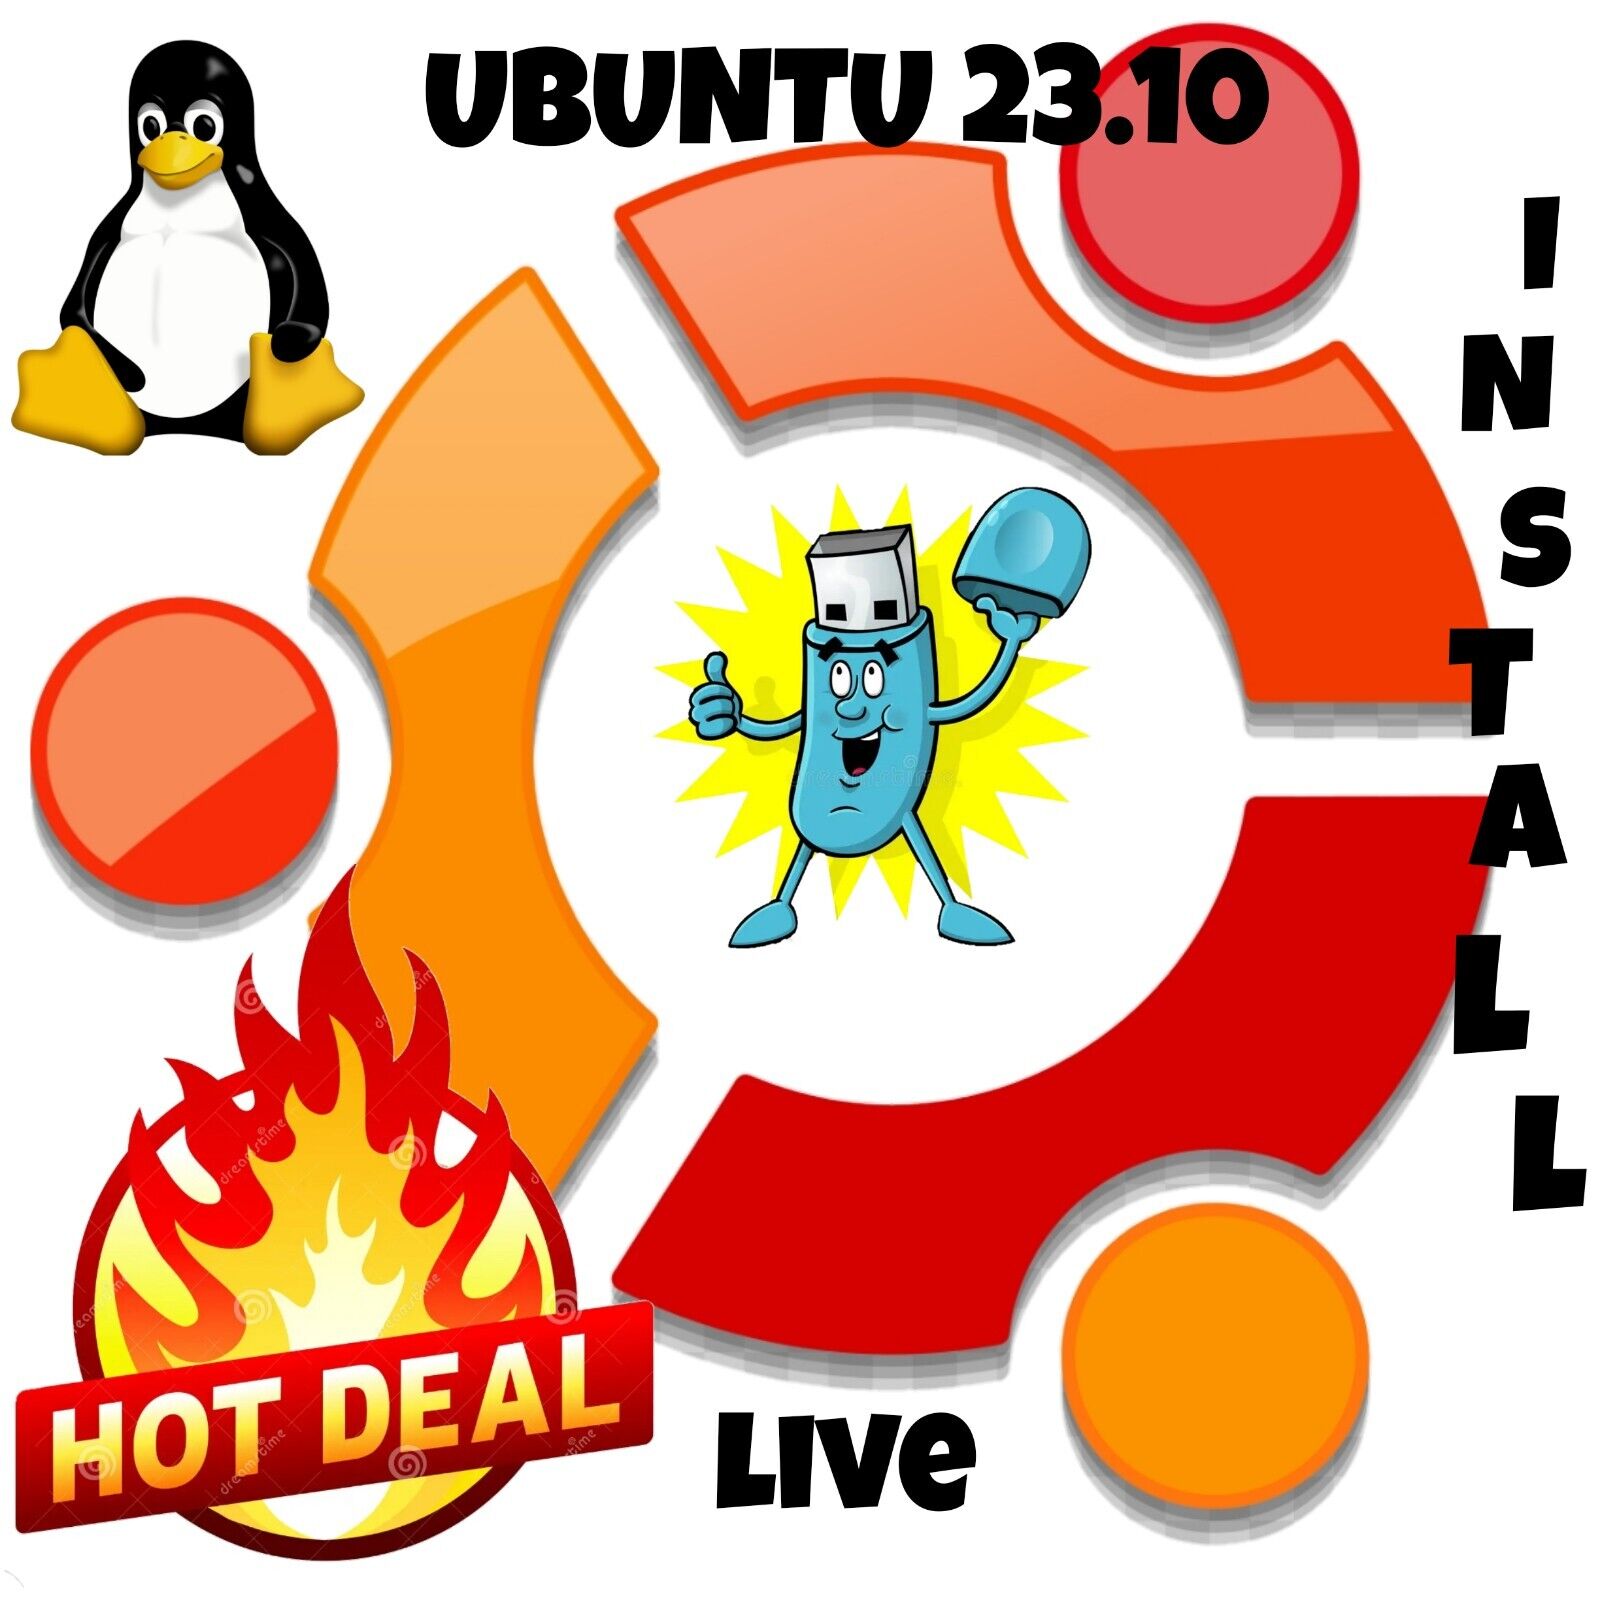 UBUNTU 23.10 LINUX USB LIVE OR FULL INSTALL, BOOTABLE, INSTALL, 32 GB USB